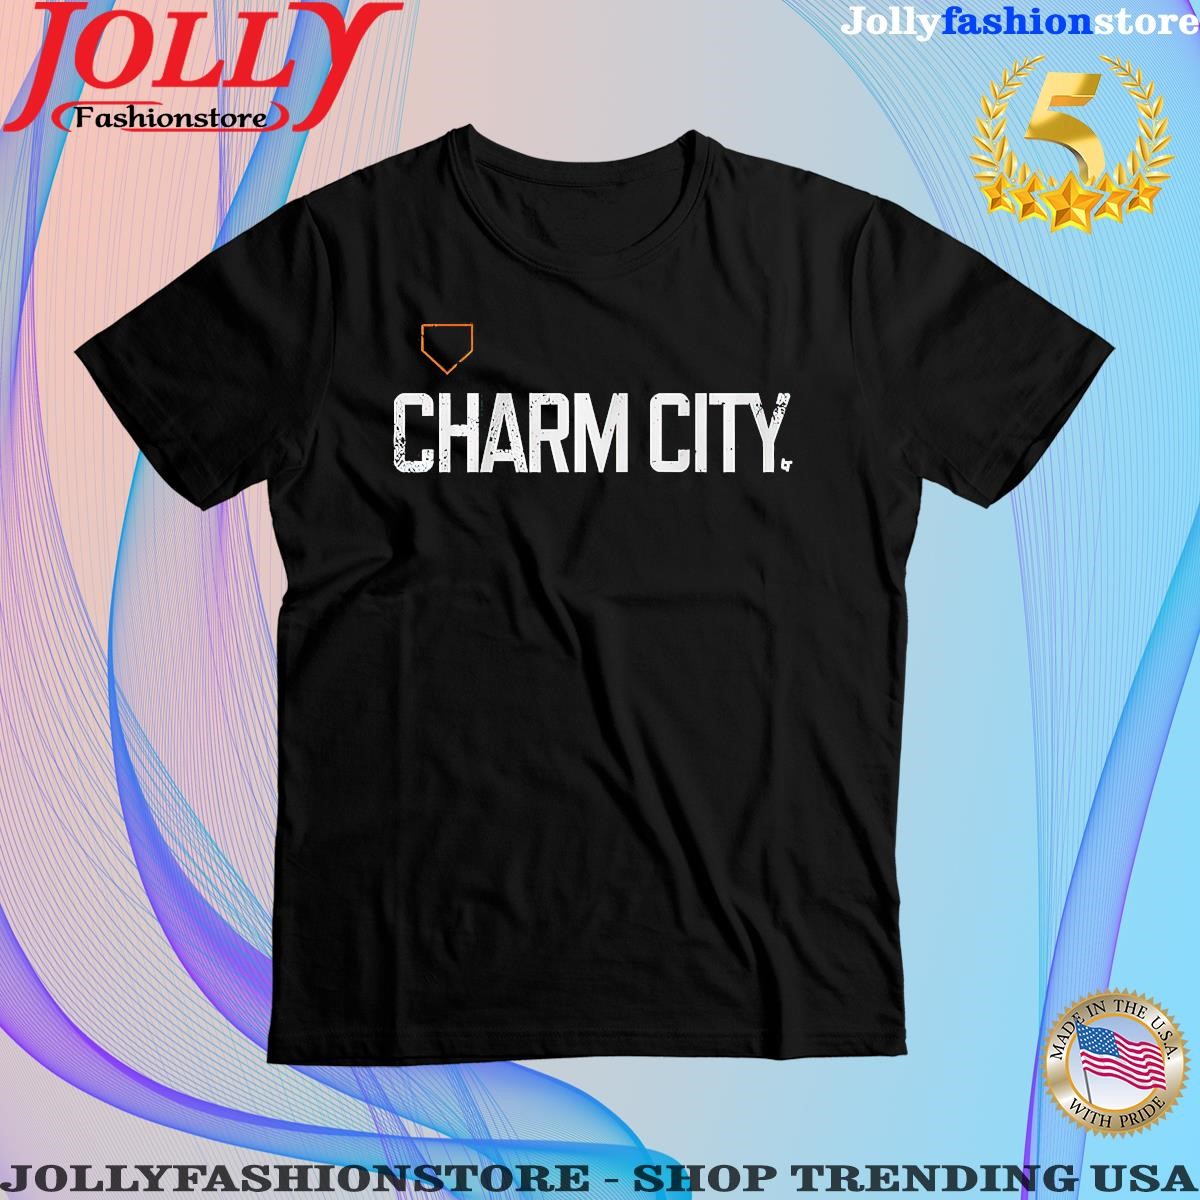 Charm city Tee Shirt